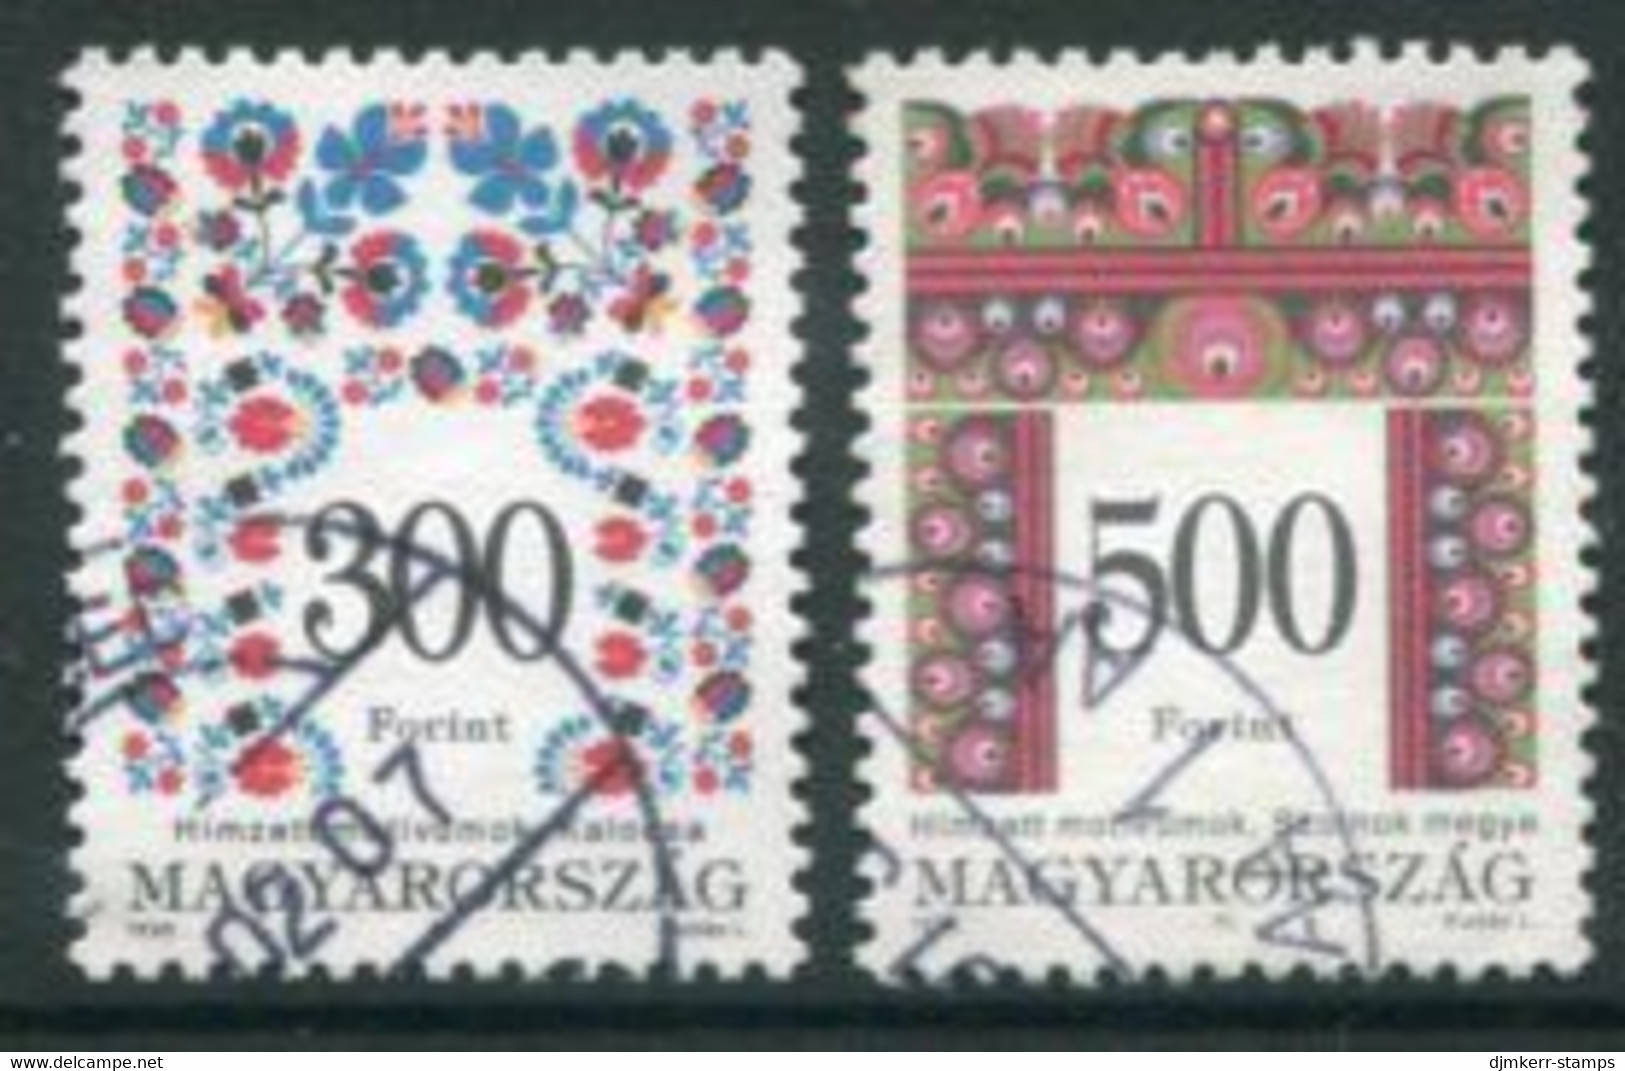 HUNGARY 1996 Folk Motif 300 And 500 Ft.  Used.  Michel 4409-10 - Usati